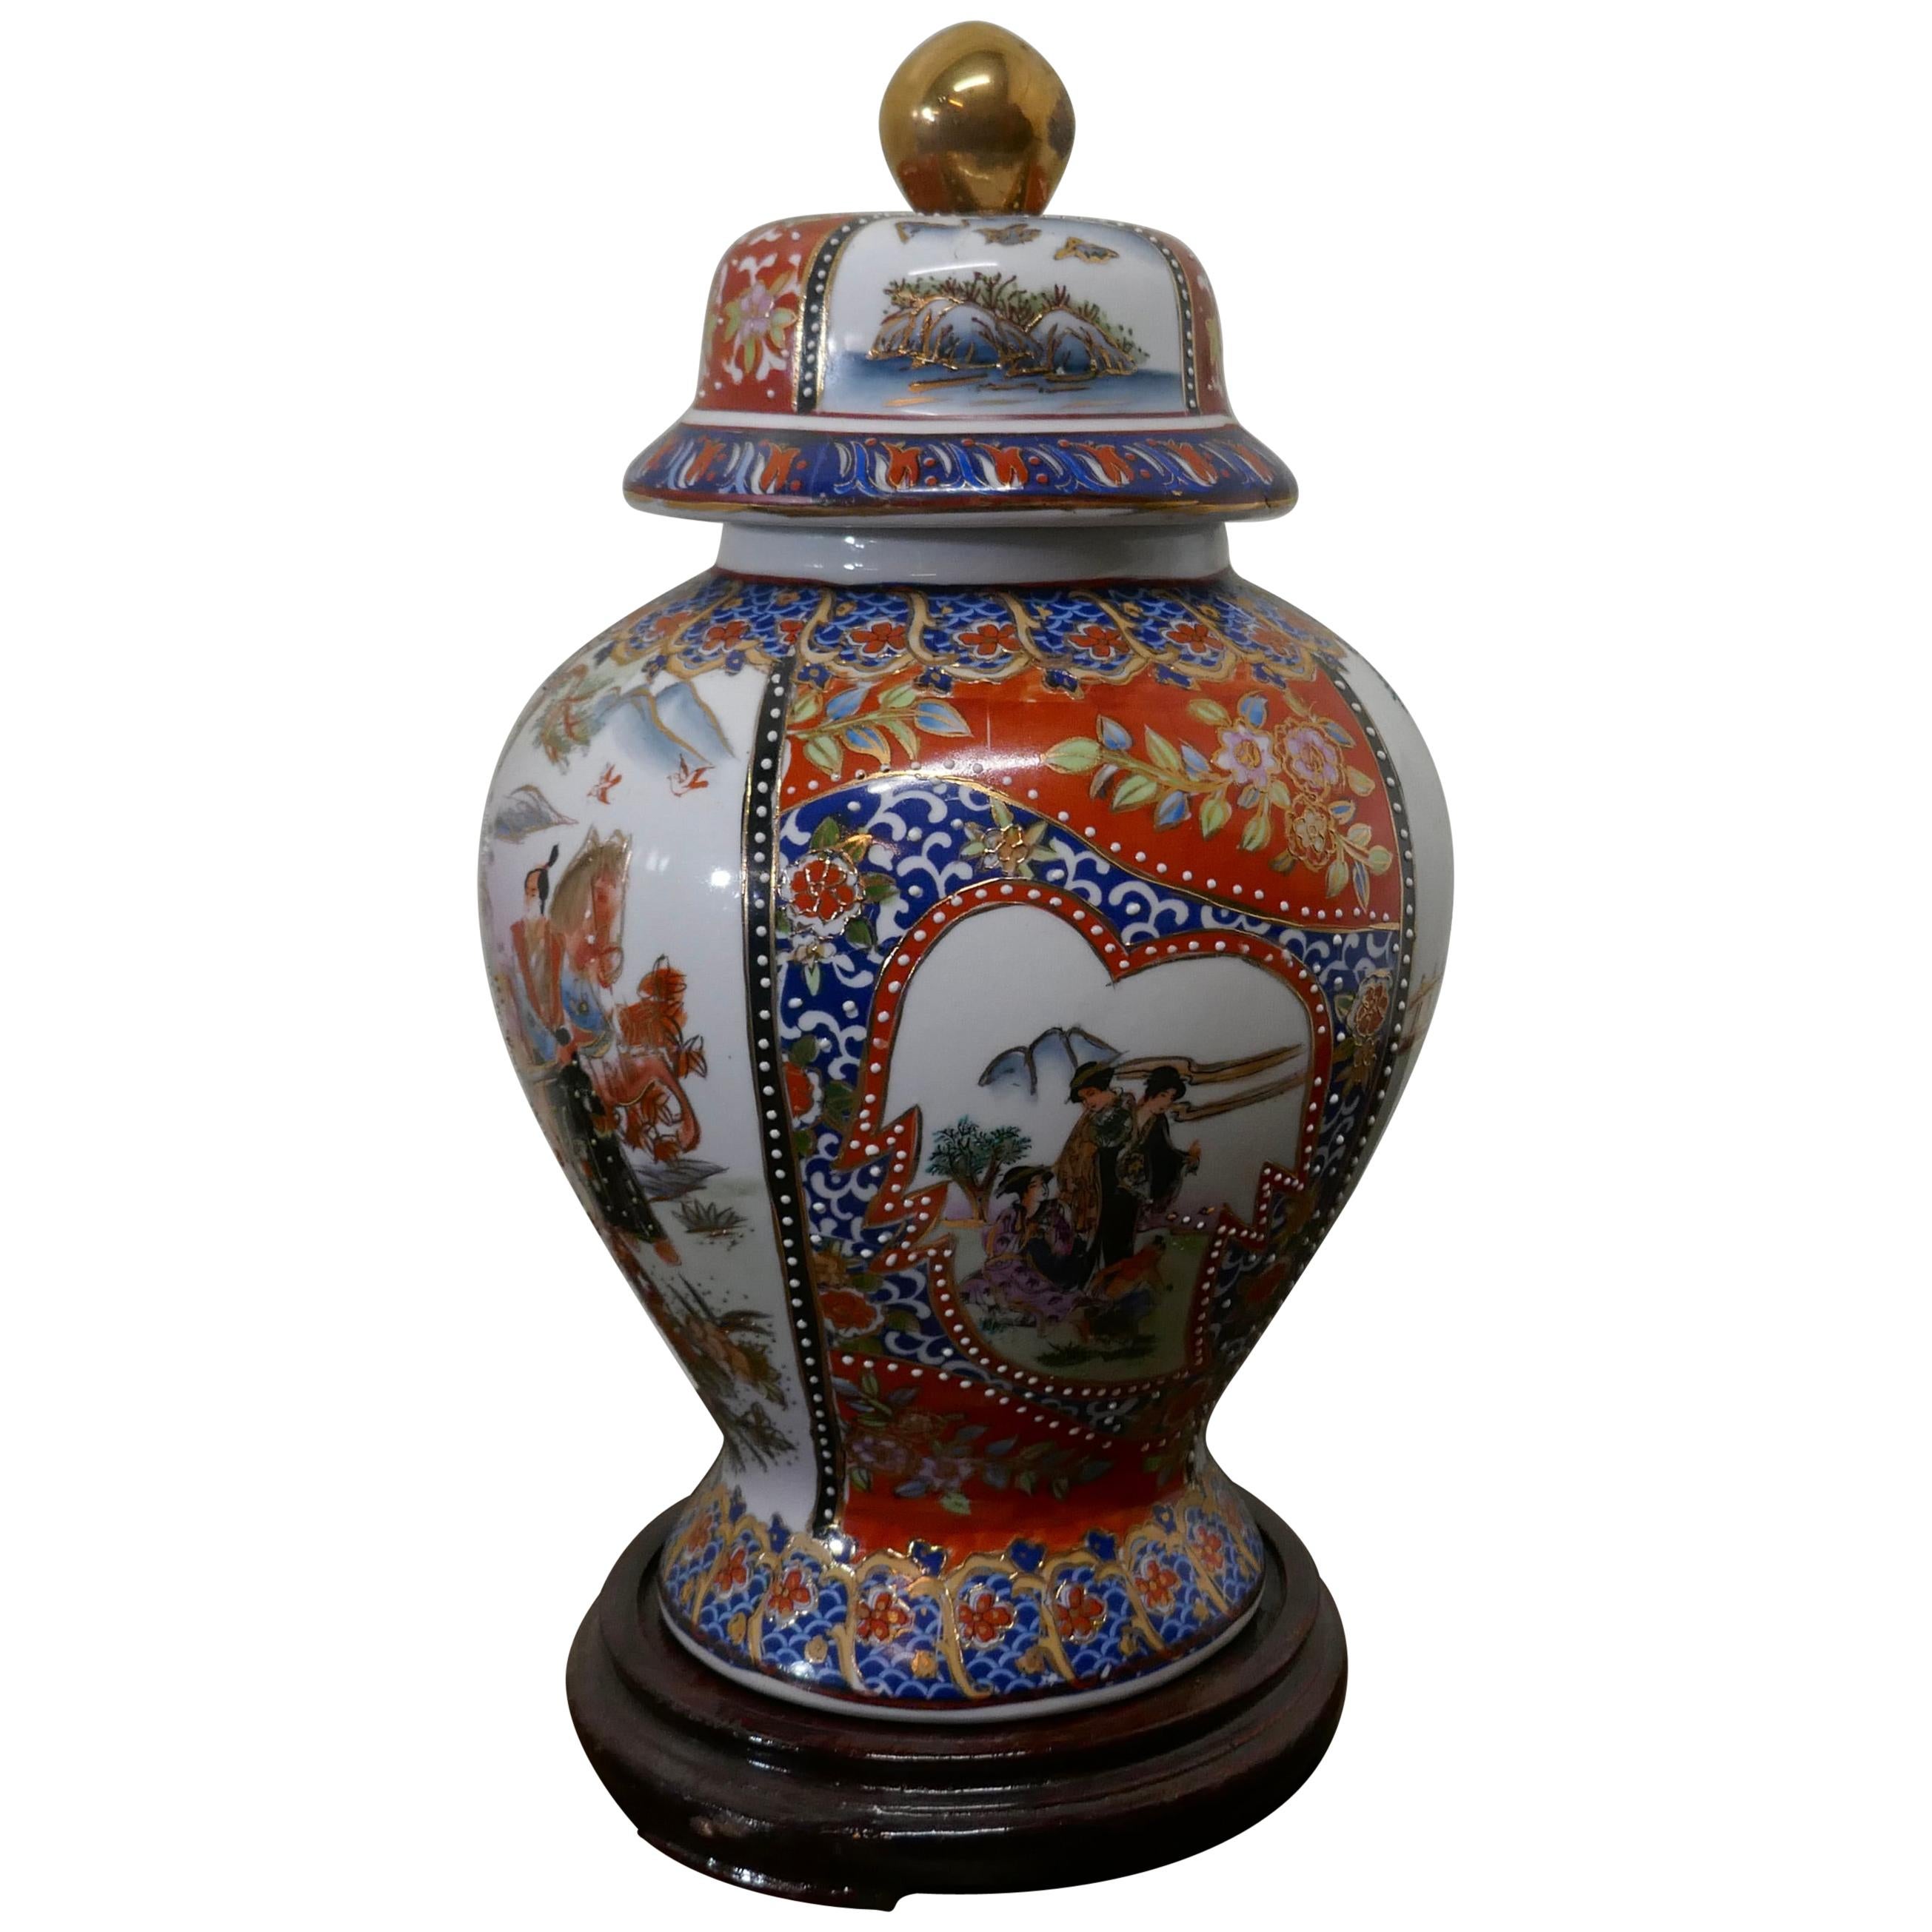 https://a.1stdibscdn.com/large-decorative-oriental-ginger-or-spice-jar-on-stand-for-sale/1121189/f_221025721610746736156/22102572_master.jpg